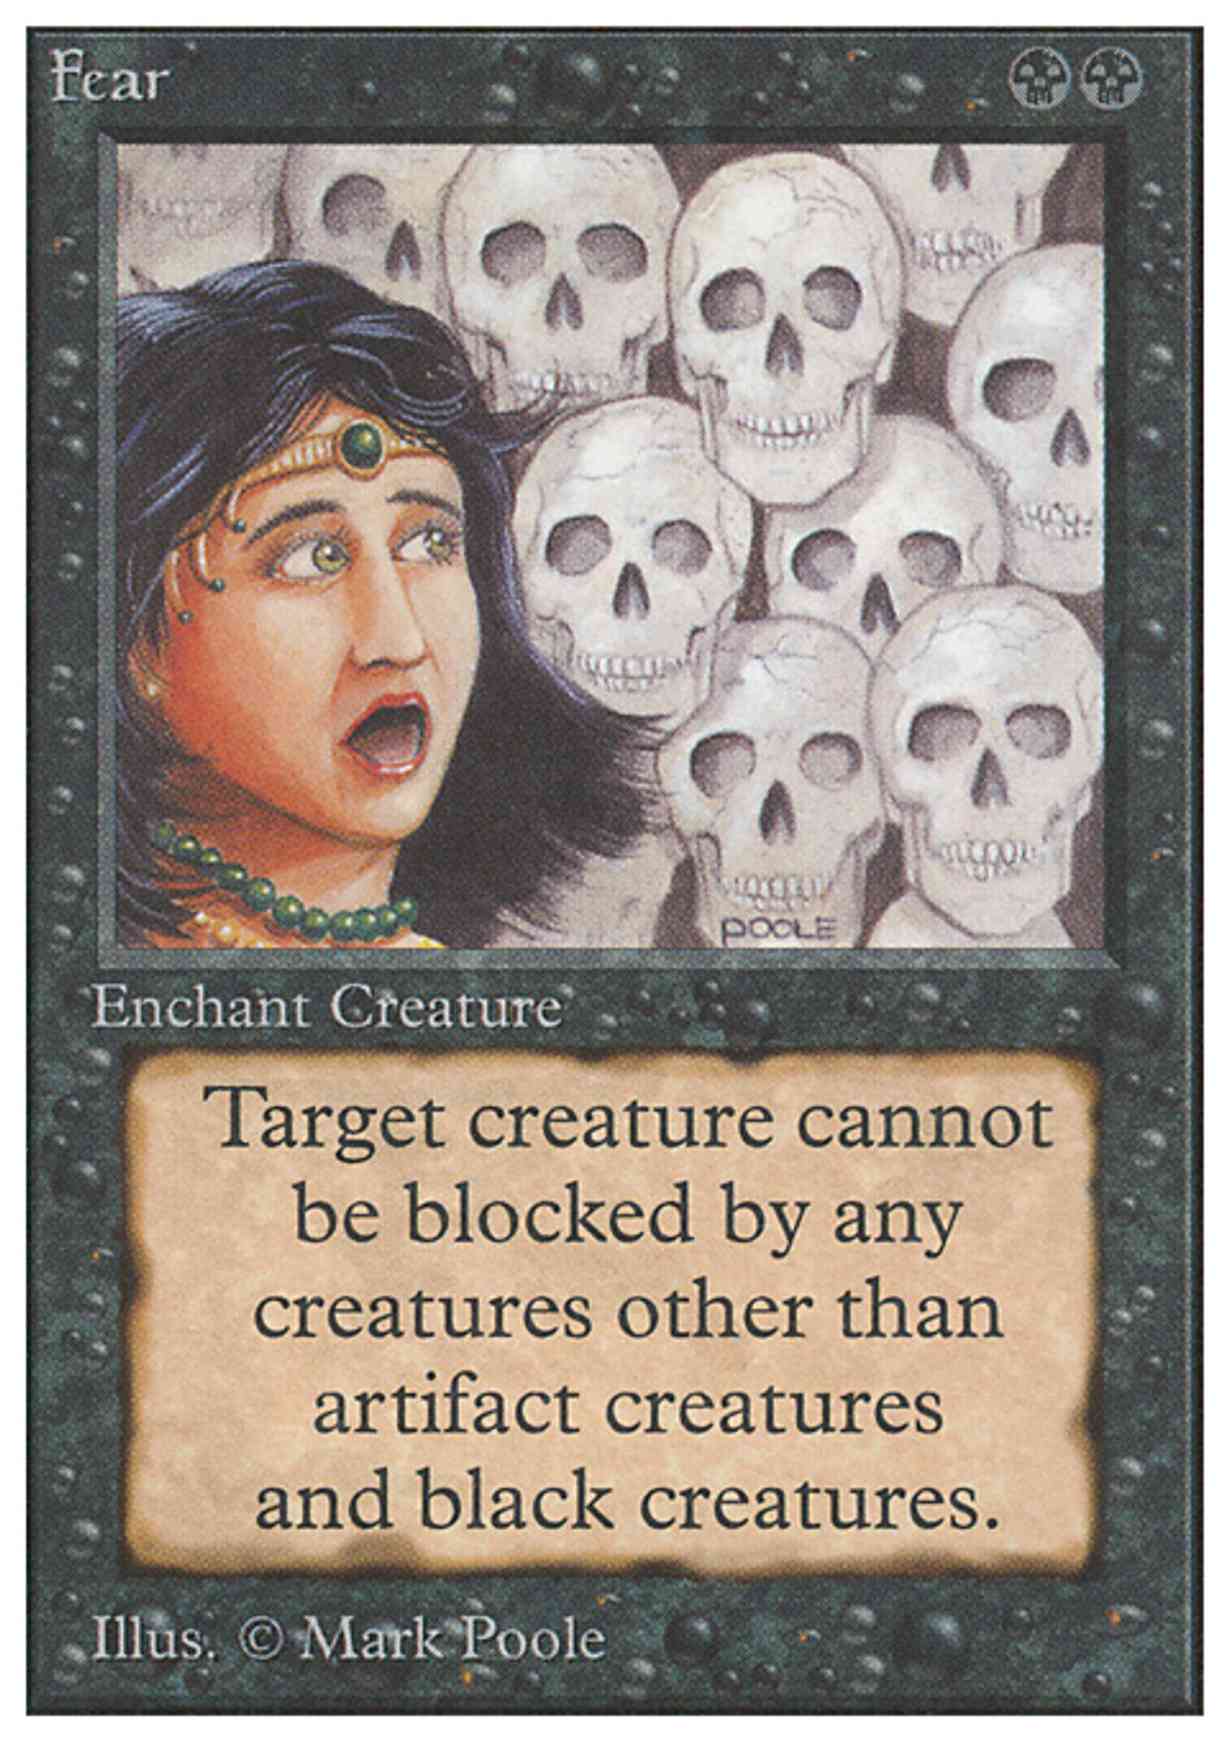 Fear magic card front